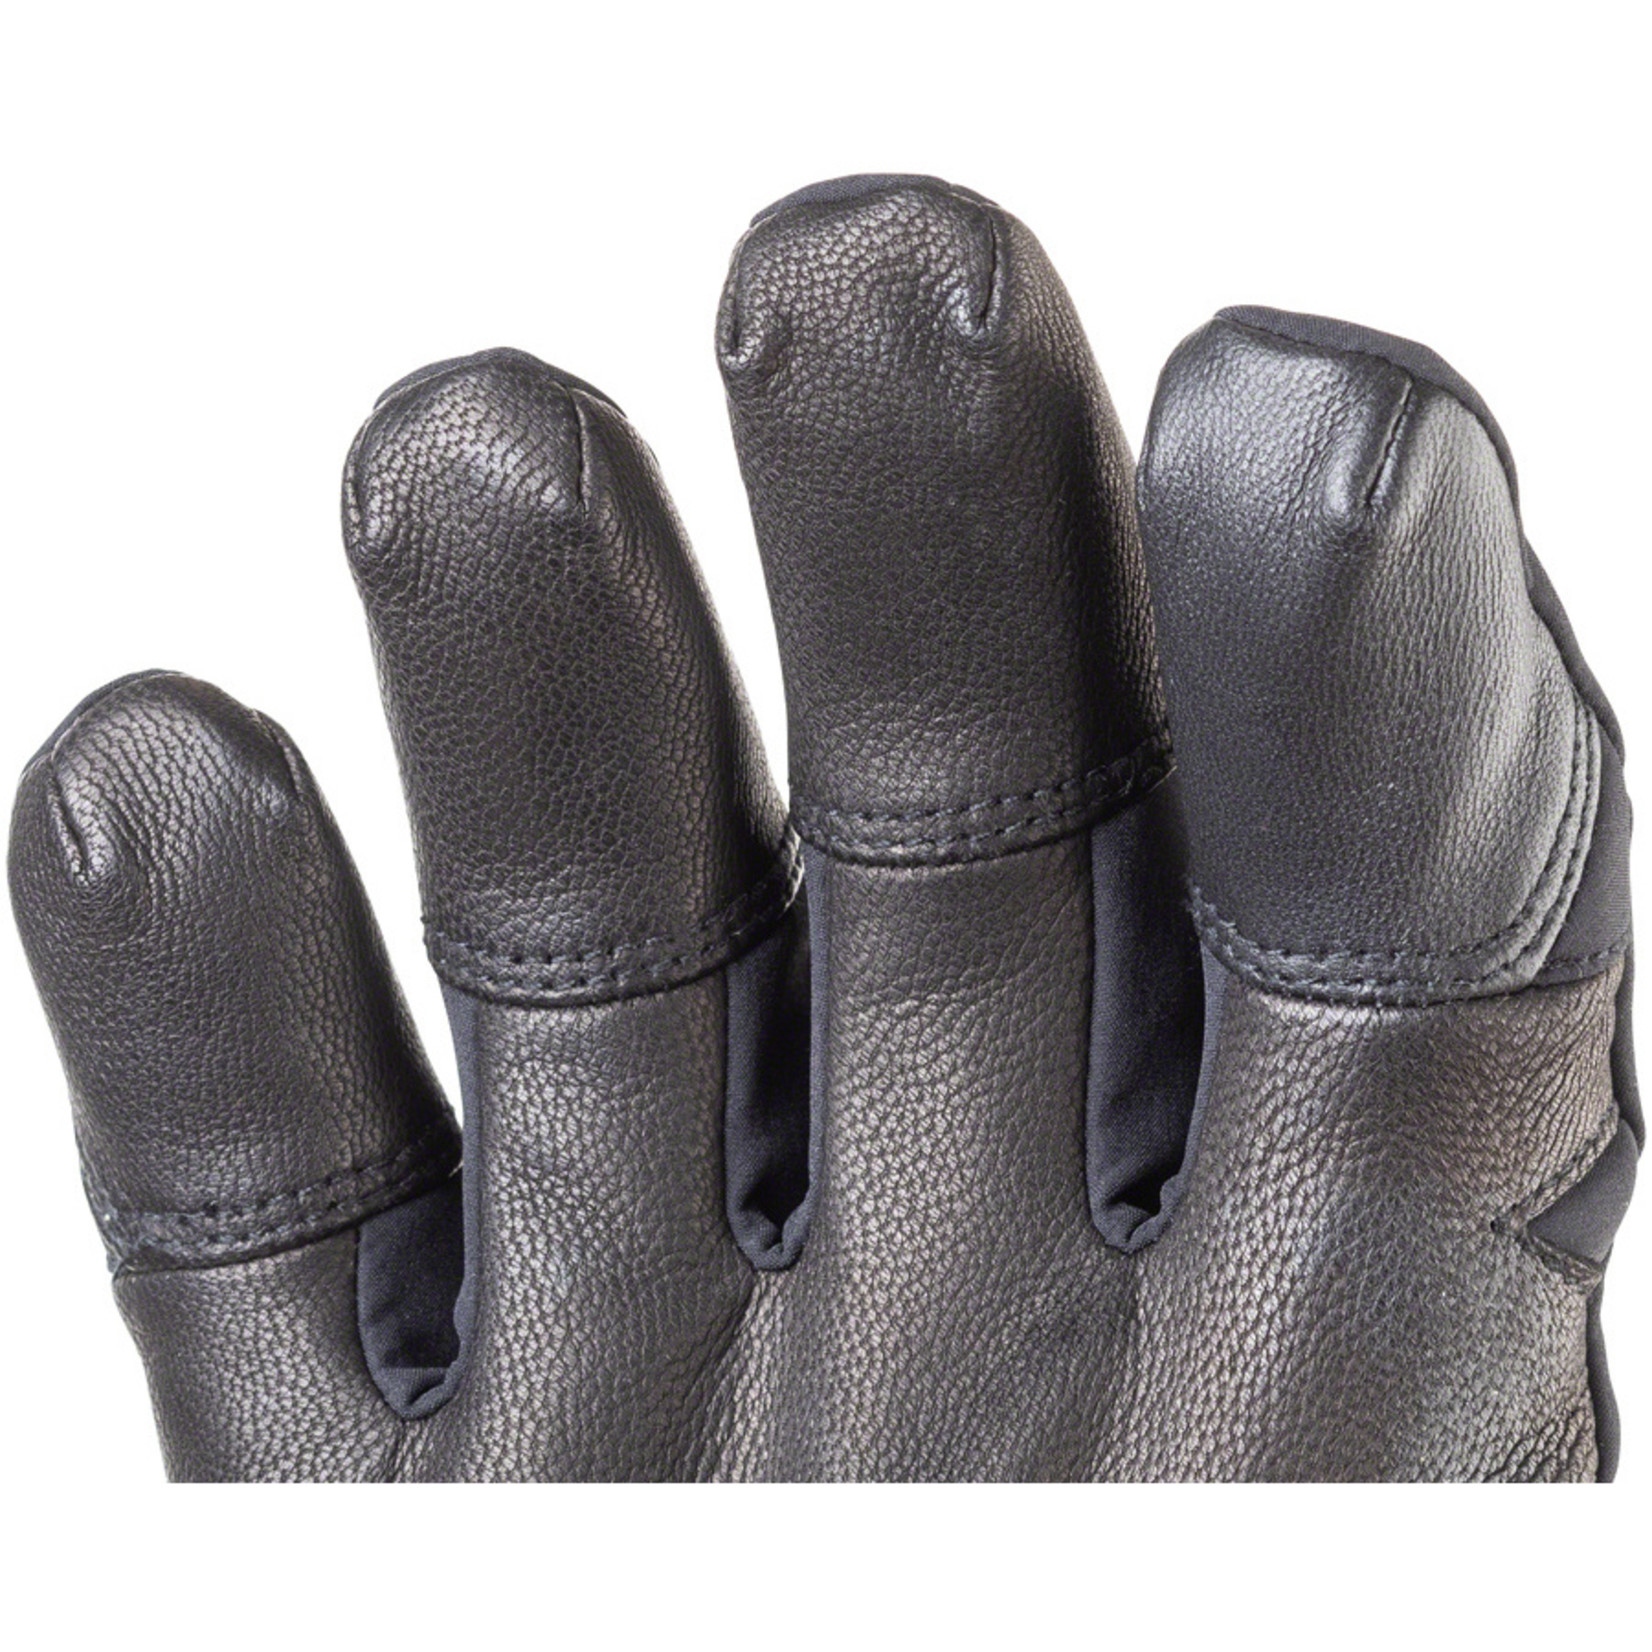 45NRTH 45Nrth Sturmfist 5 Finger Gloves, Black